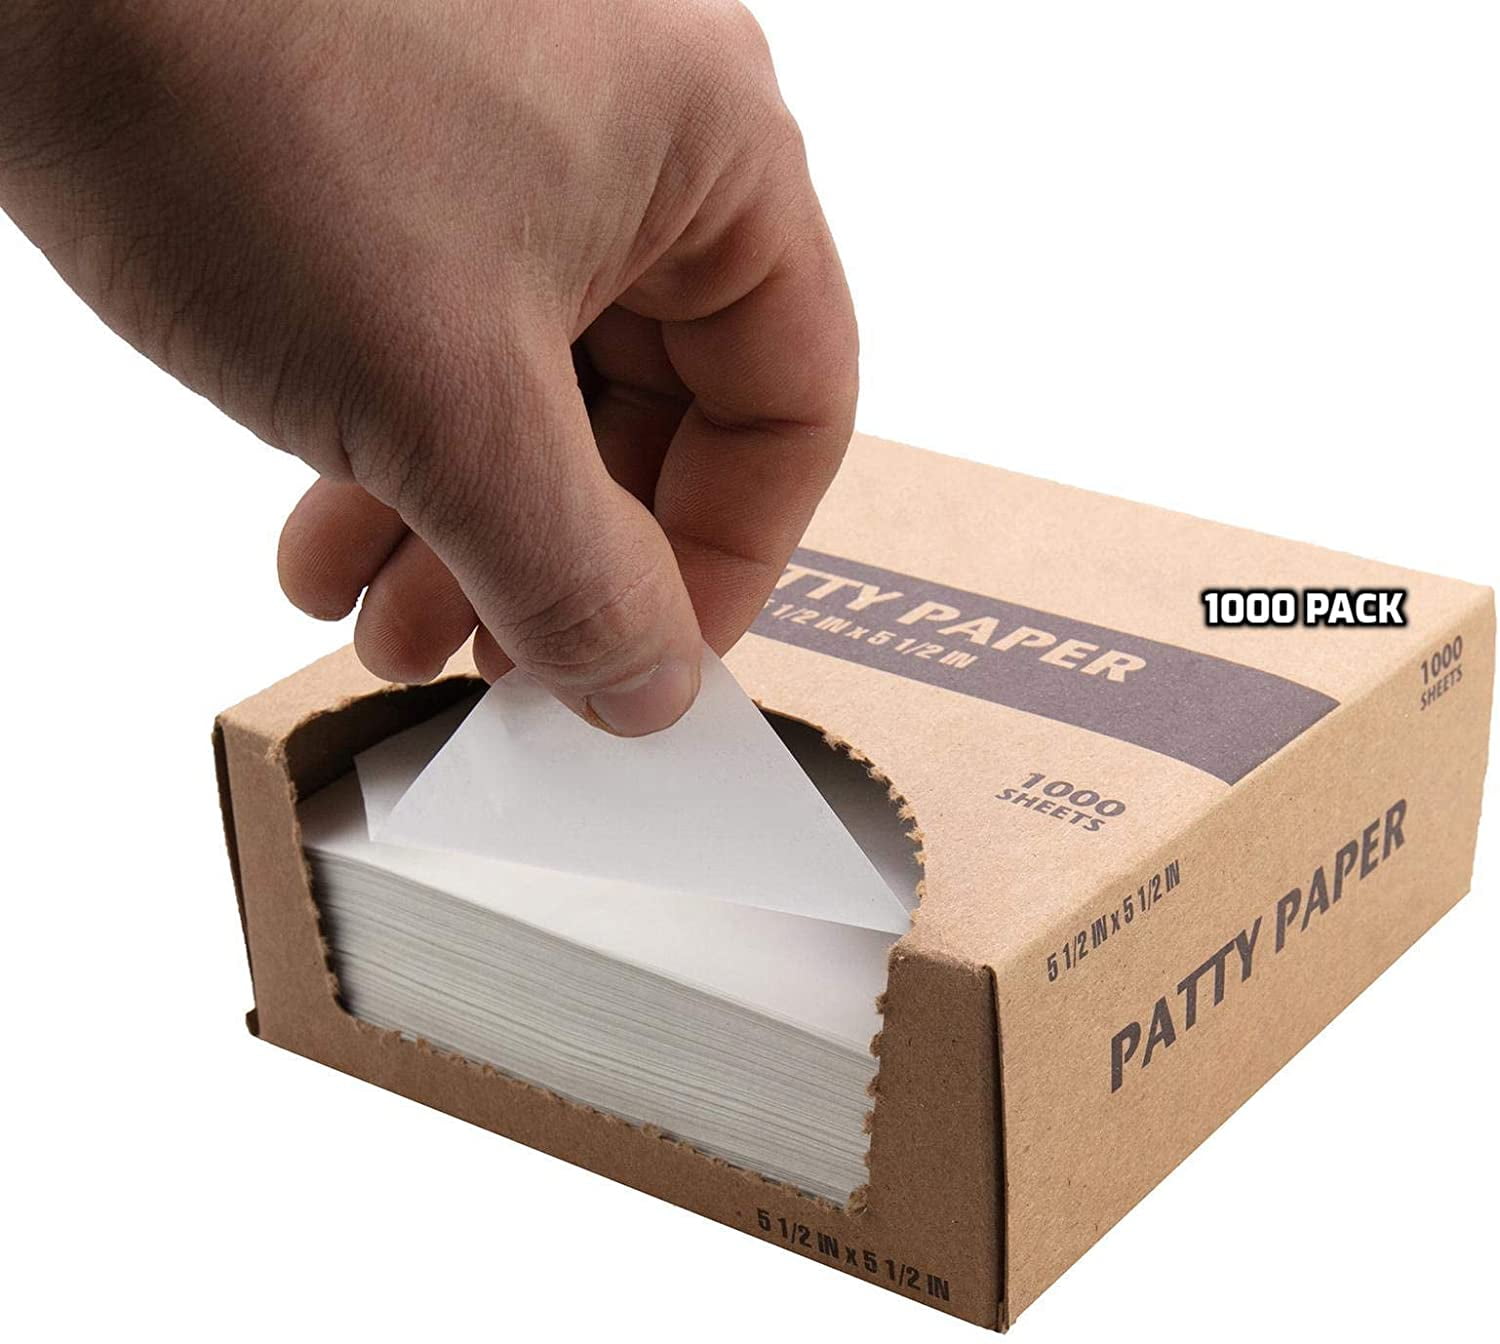 Choice 5 3/16 Semi-Wax 25# - 33# Square Paper Patty with 3 Holes - 680/Box